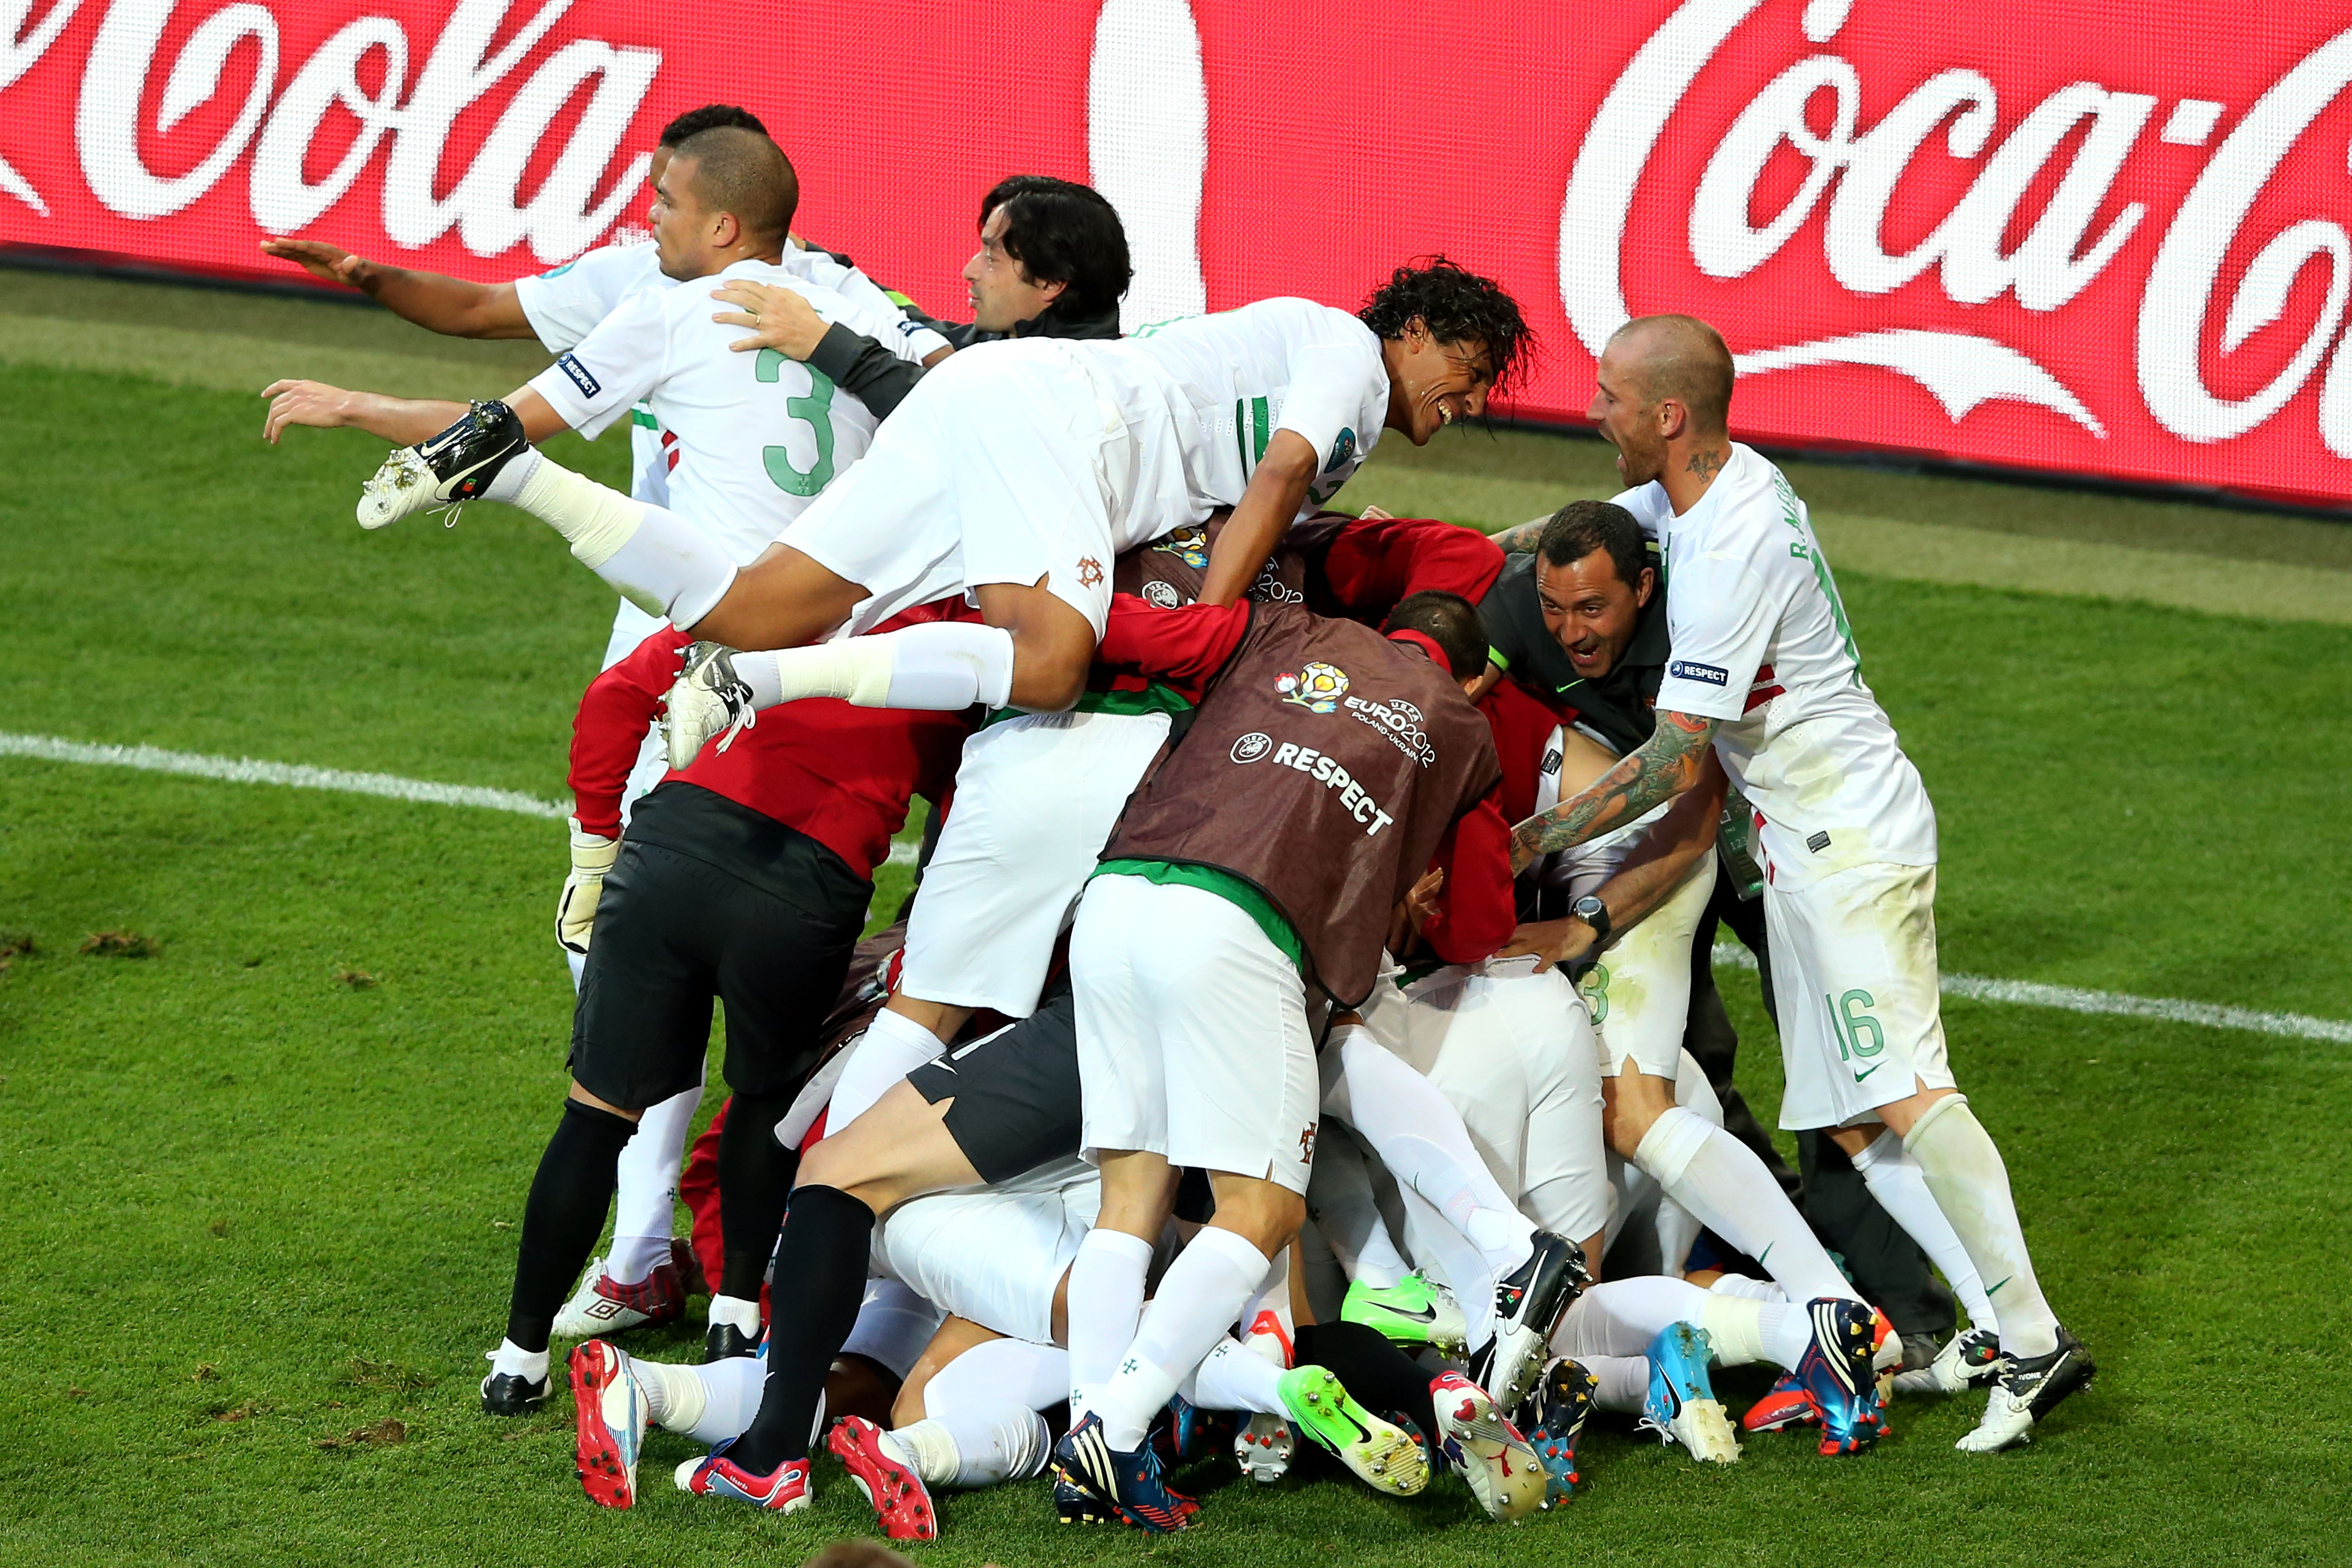 Portugal firar vinsten med en klassisk tevepuckshög.